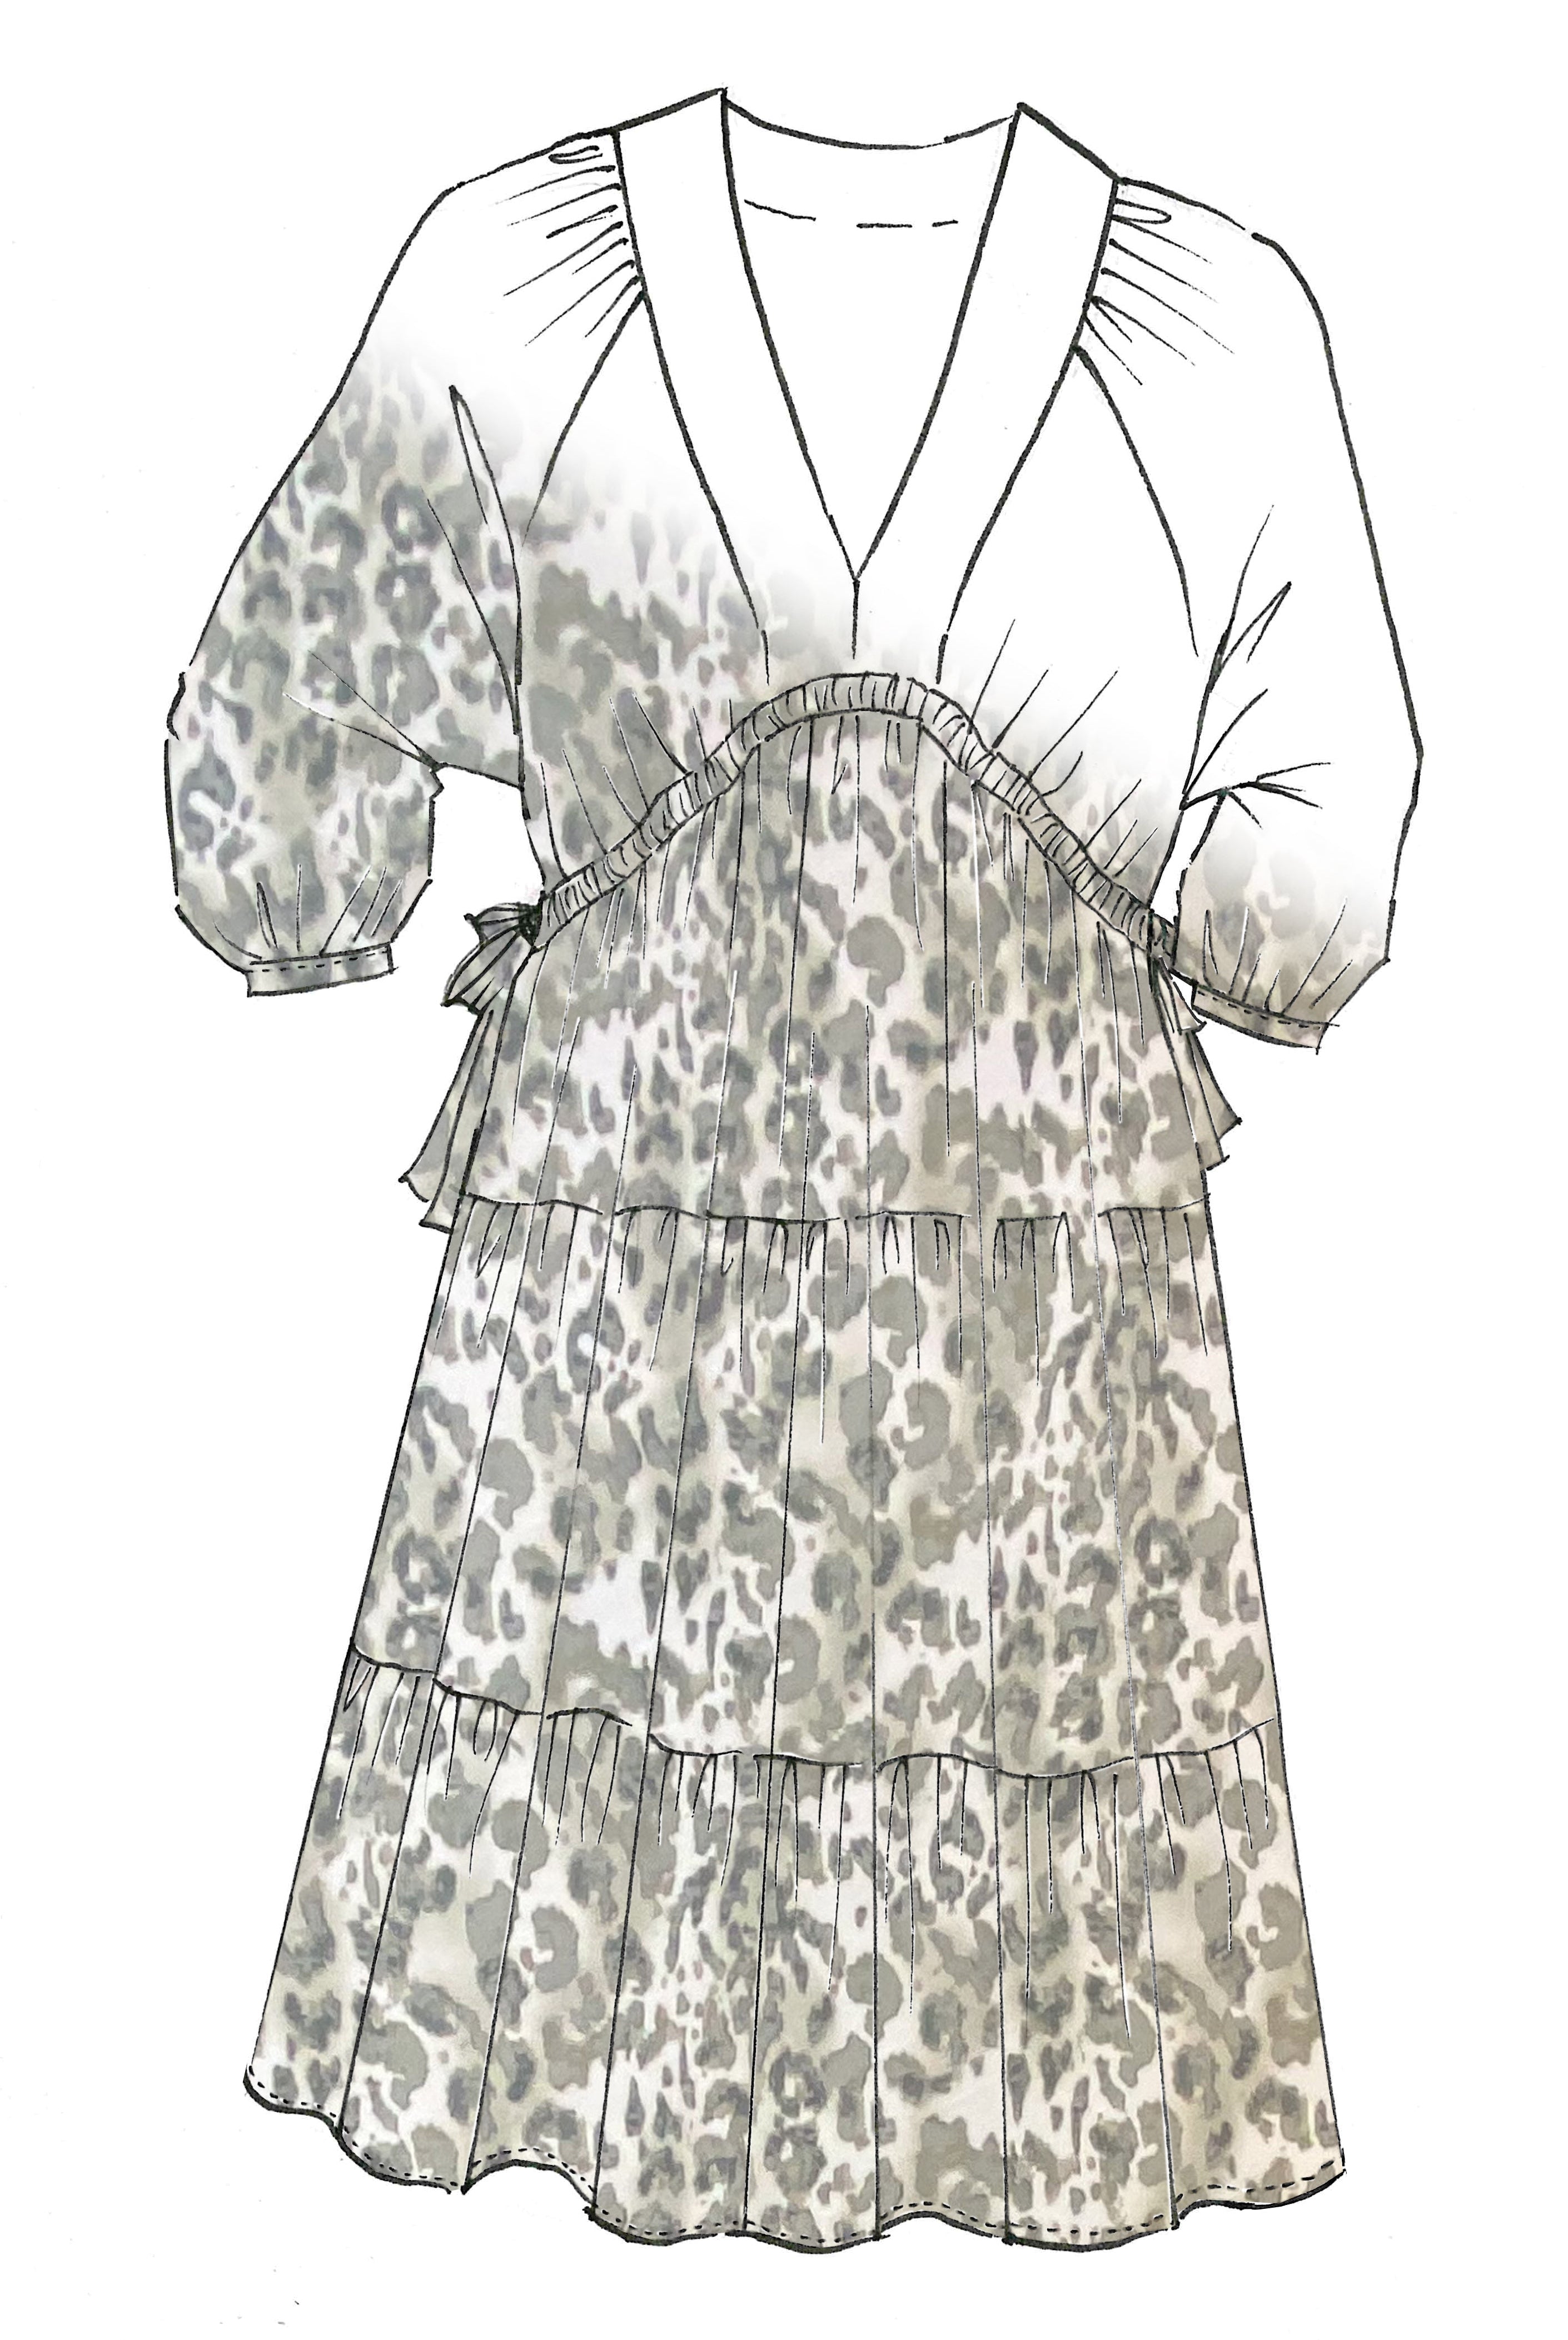 PAULA RYAN RELAXED Side Tie Cheetah Print Peasant Tunic - Cheetah - Paula Ryan